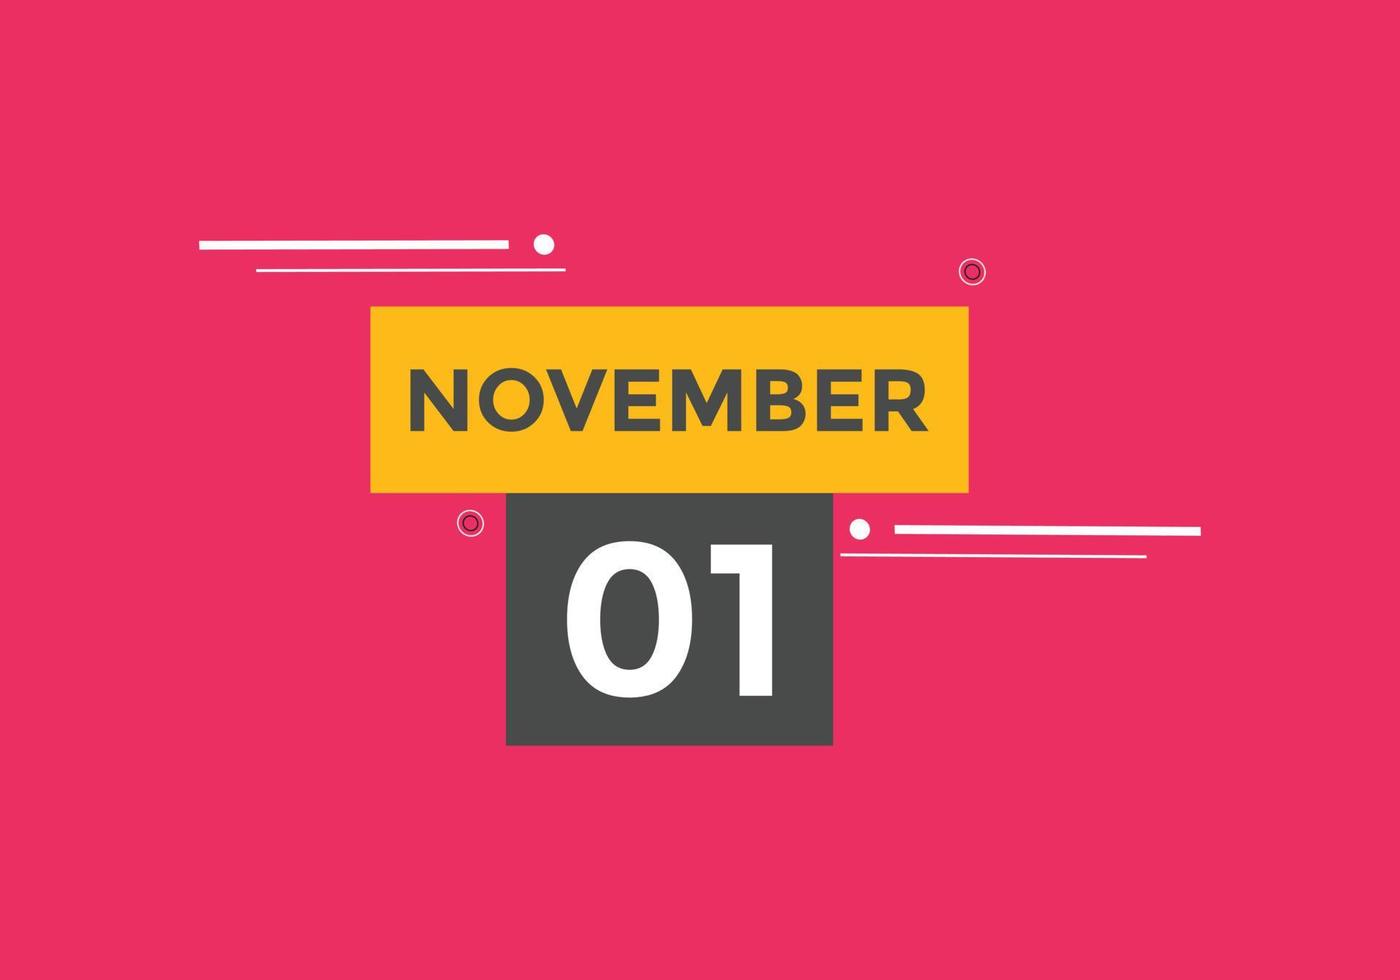 november 1 calendar reminder. 1st november daily calendar icon template. Calendar 1st november icon Design template. Vector illustration